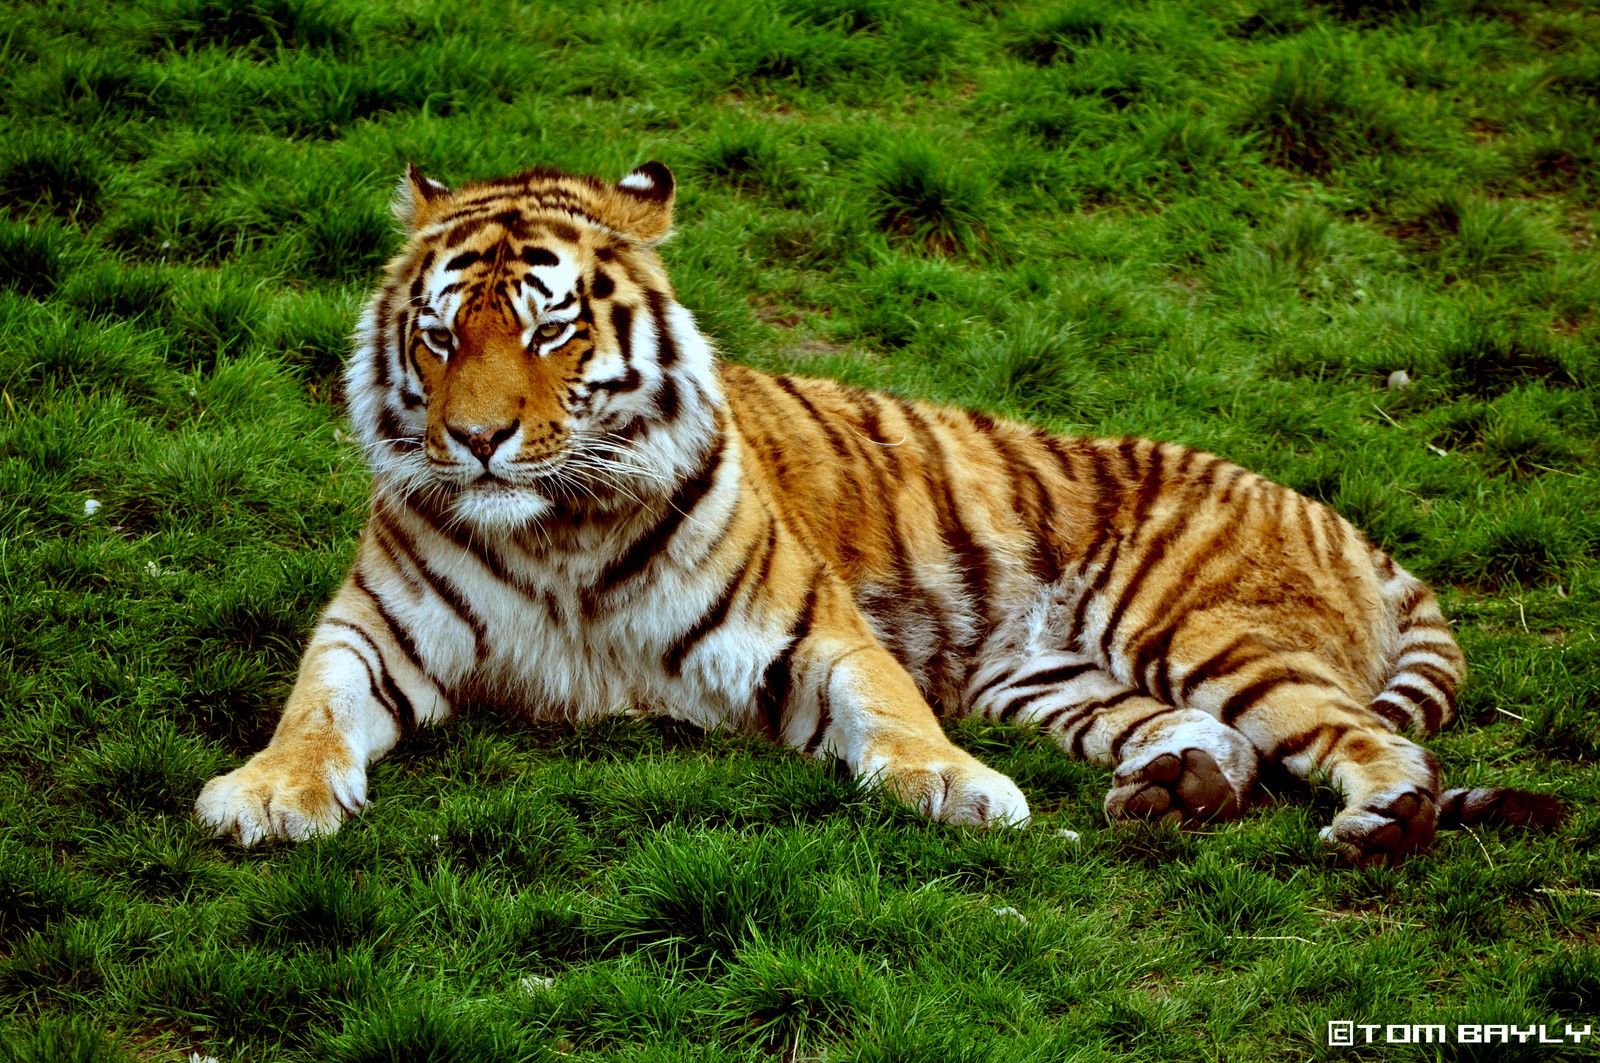 Siberian Tiger at Colchester Zoo, UK